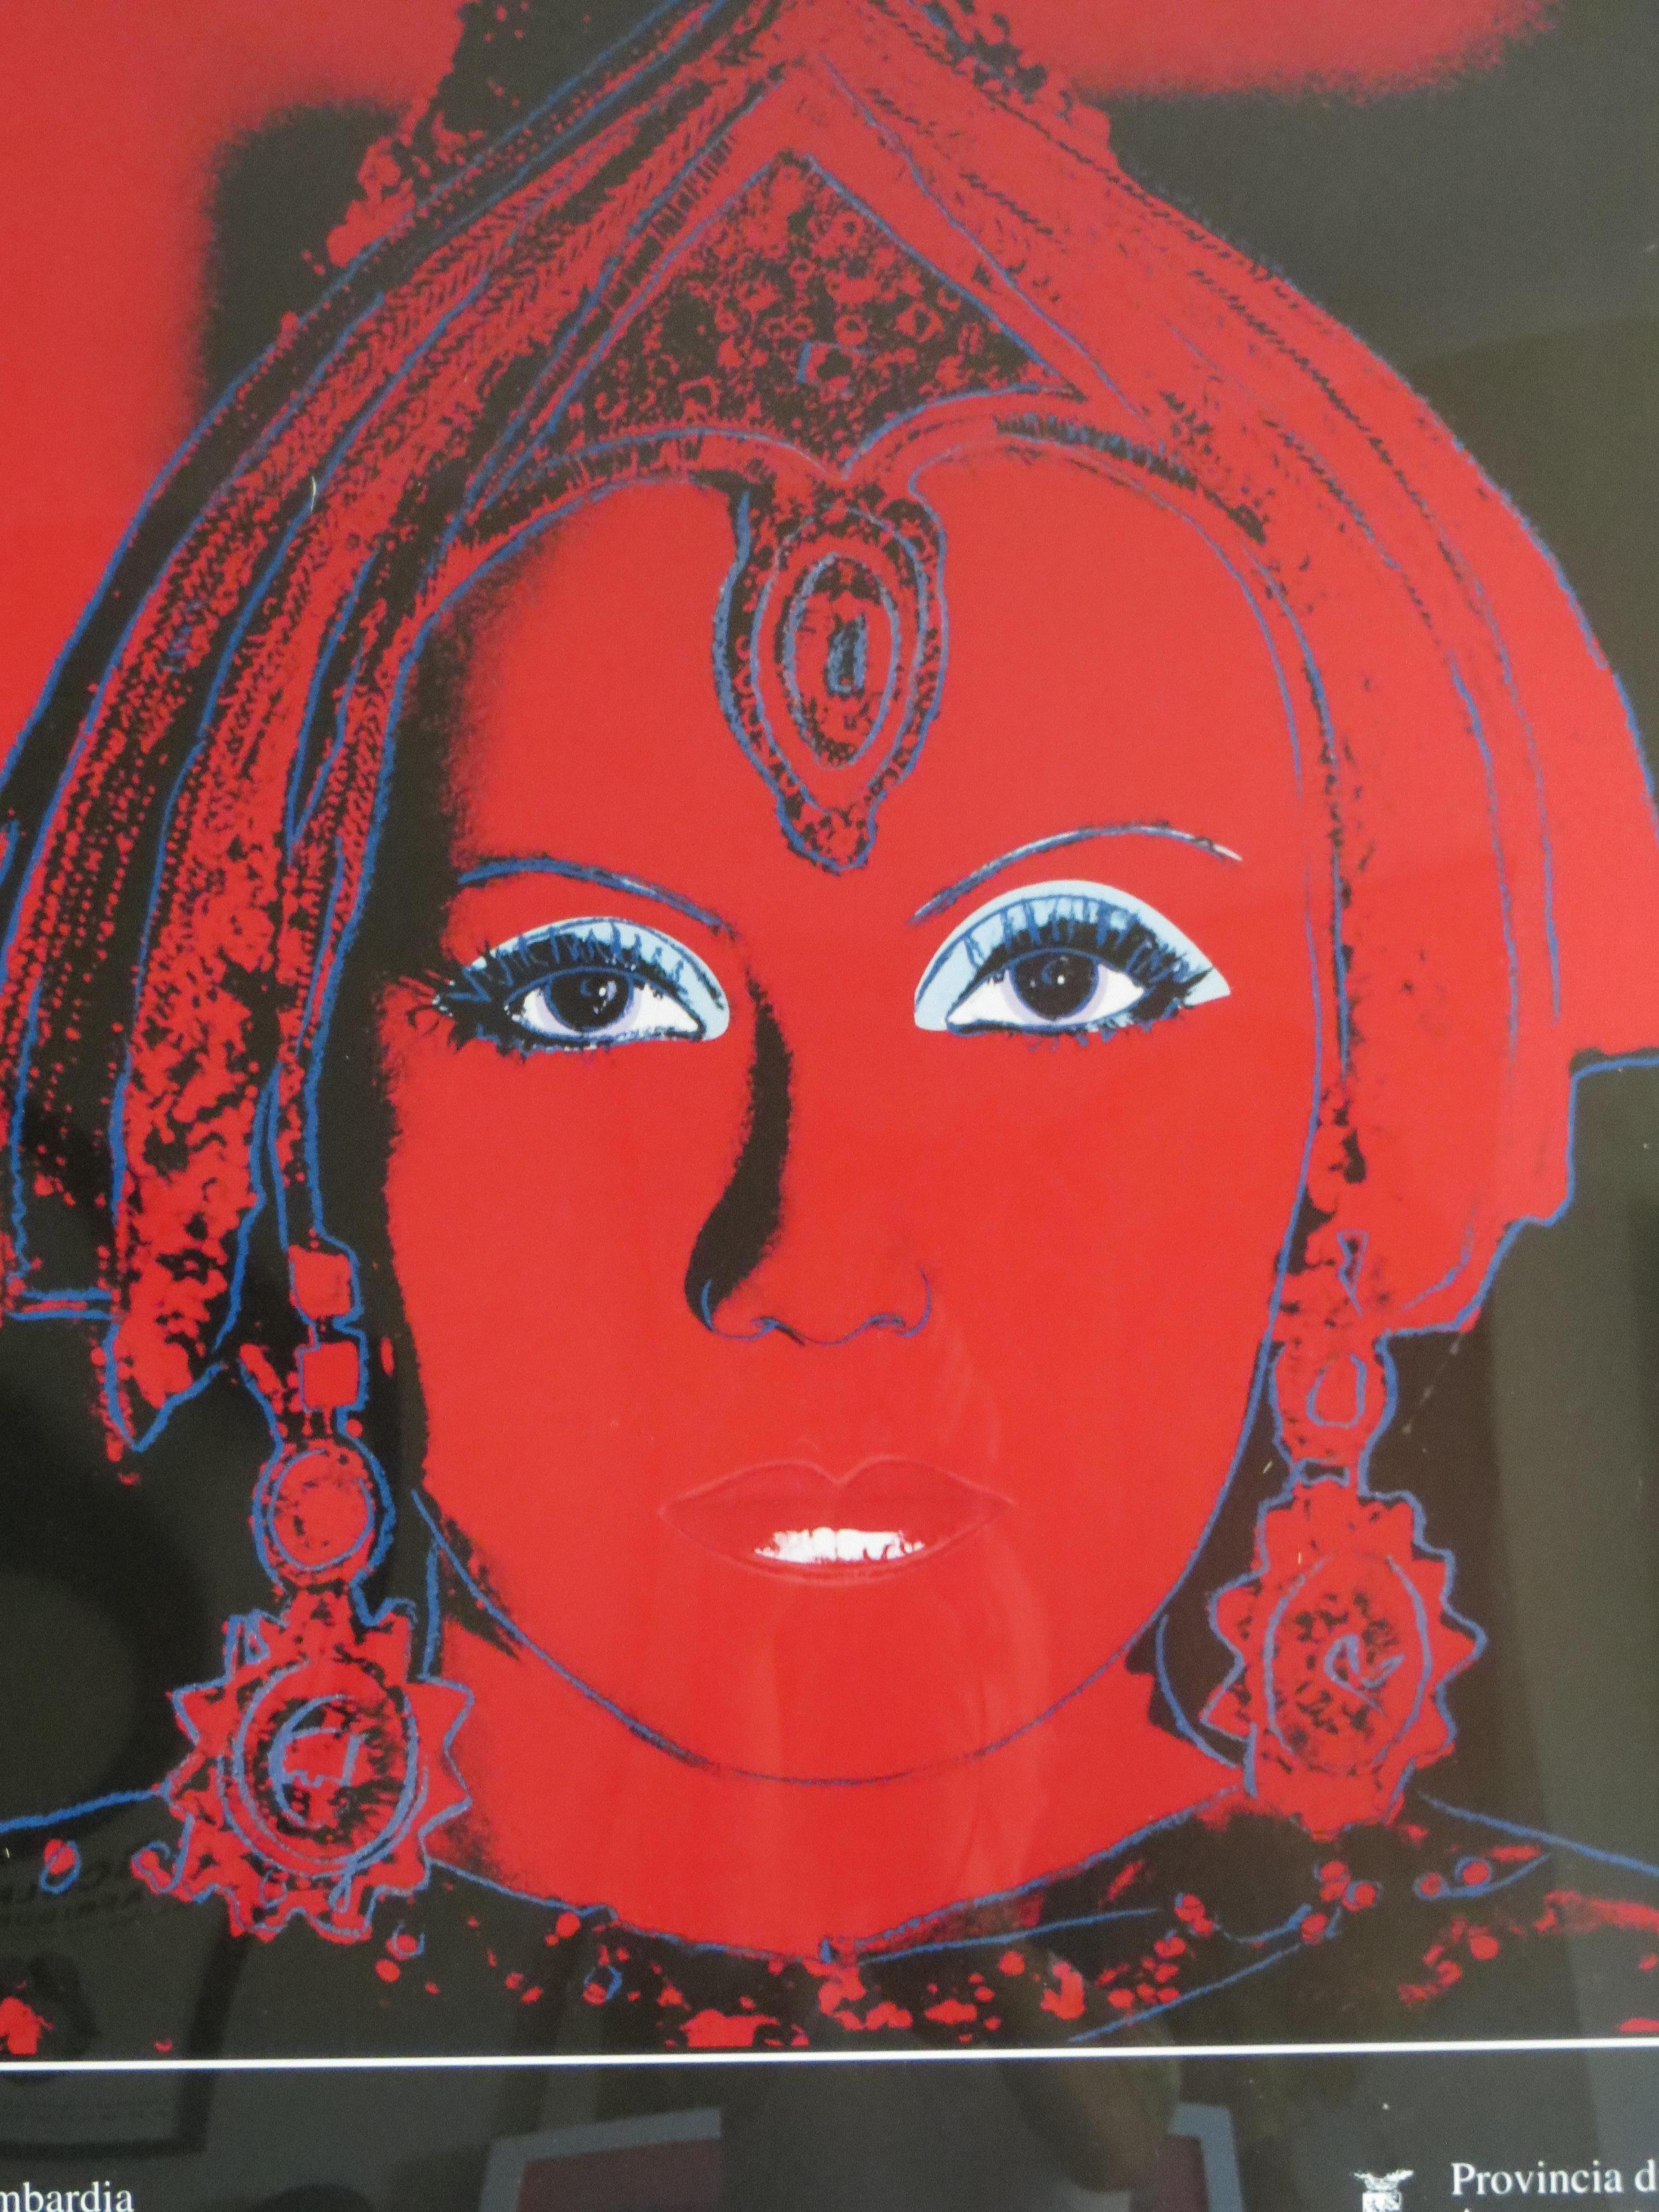 Andy Warhol Exhibition Poster, Greta Garbo, Milan 1995 For Sale 1